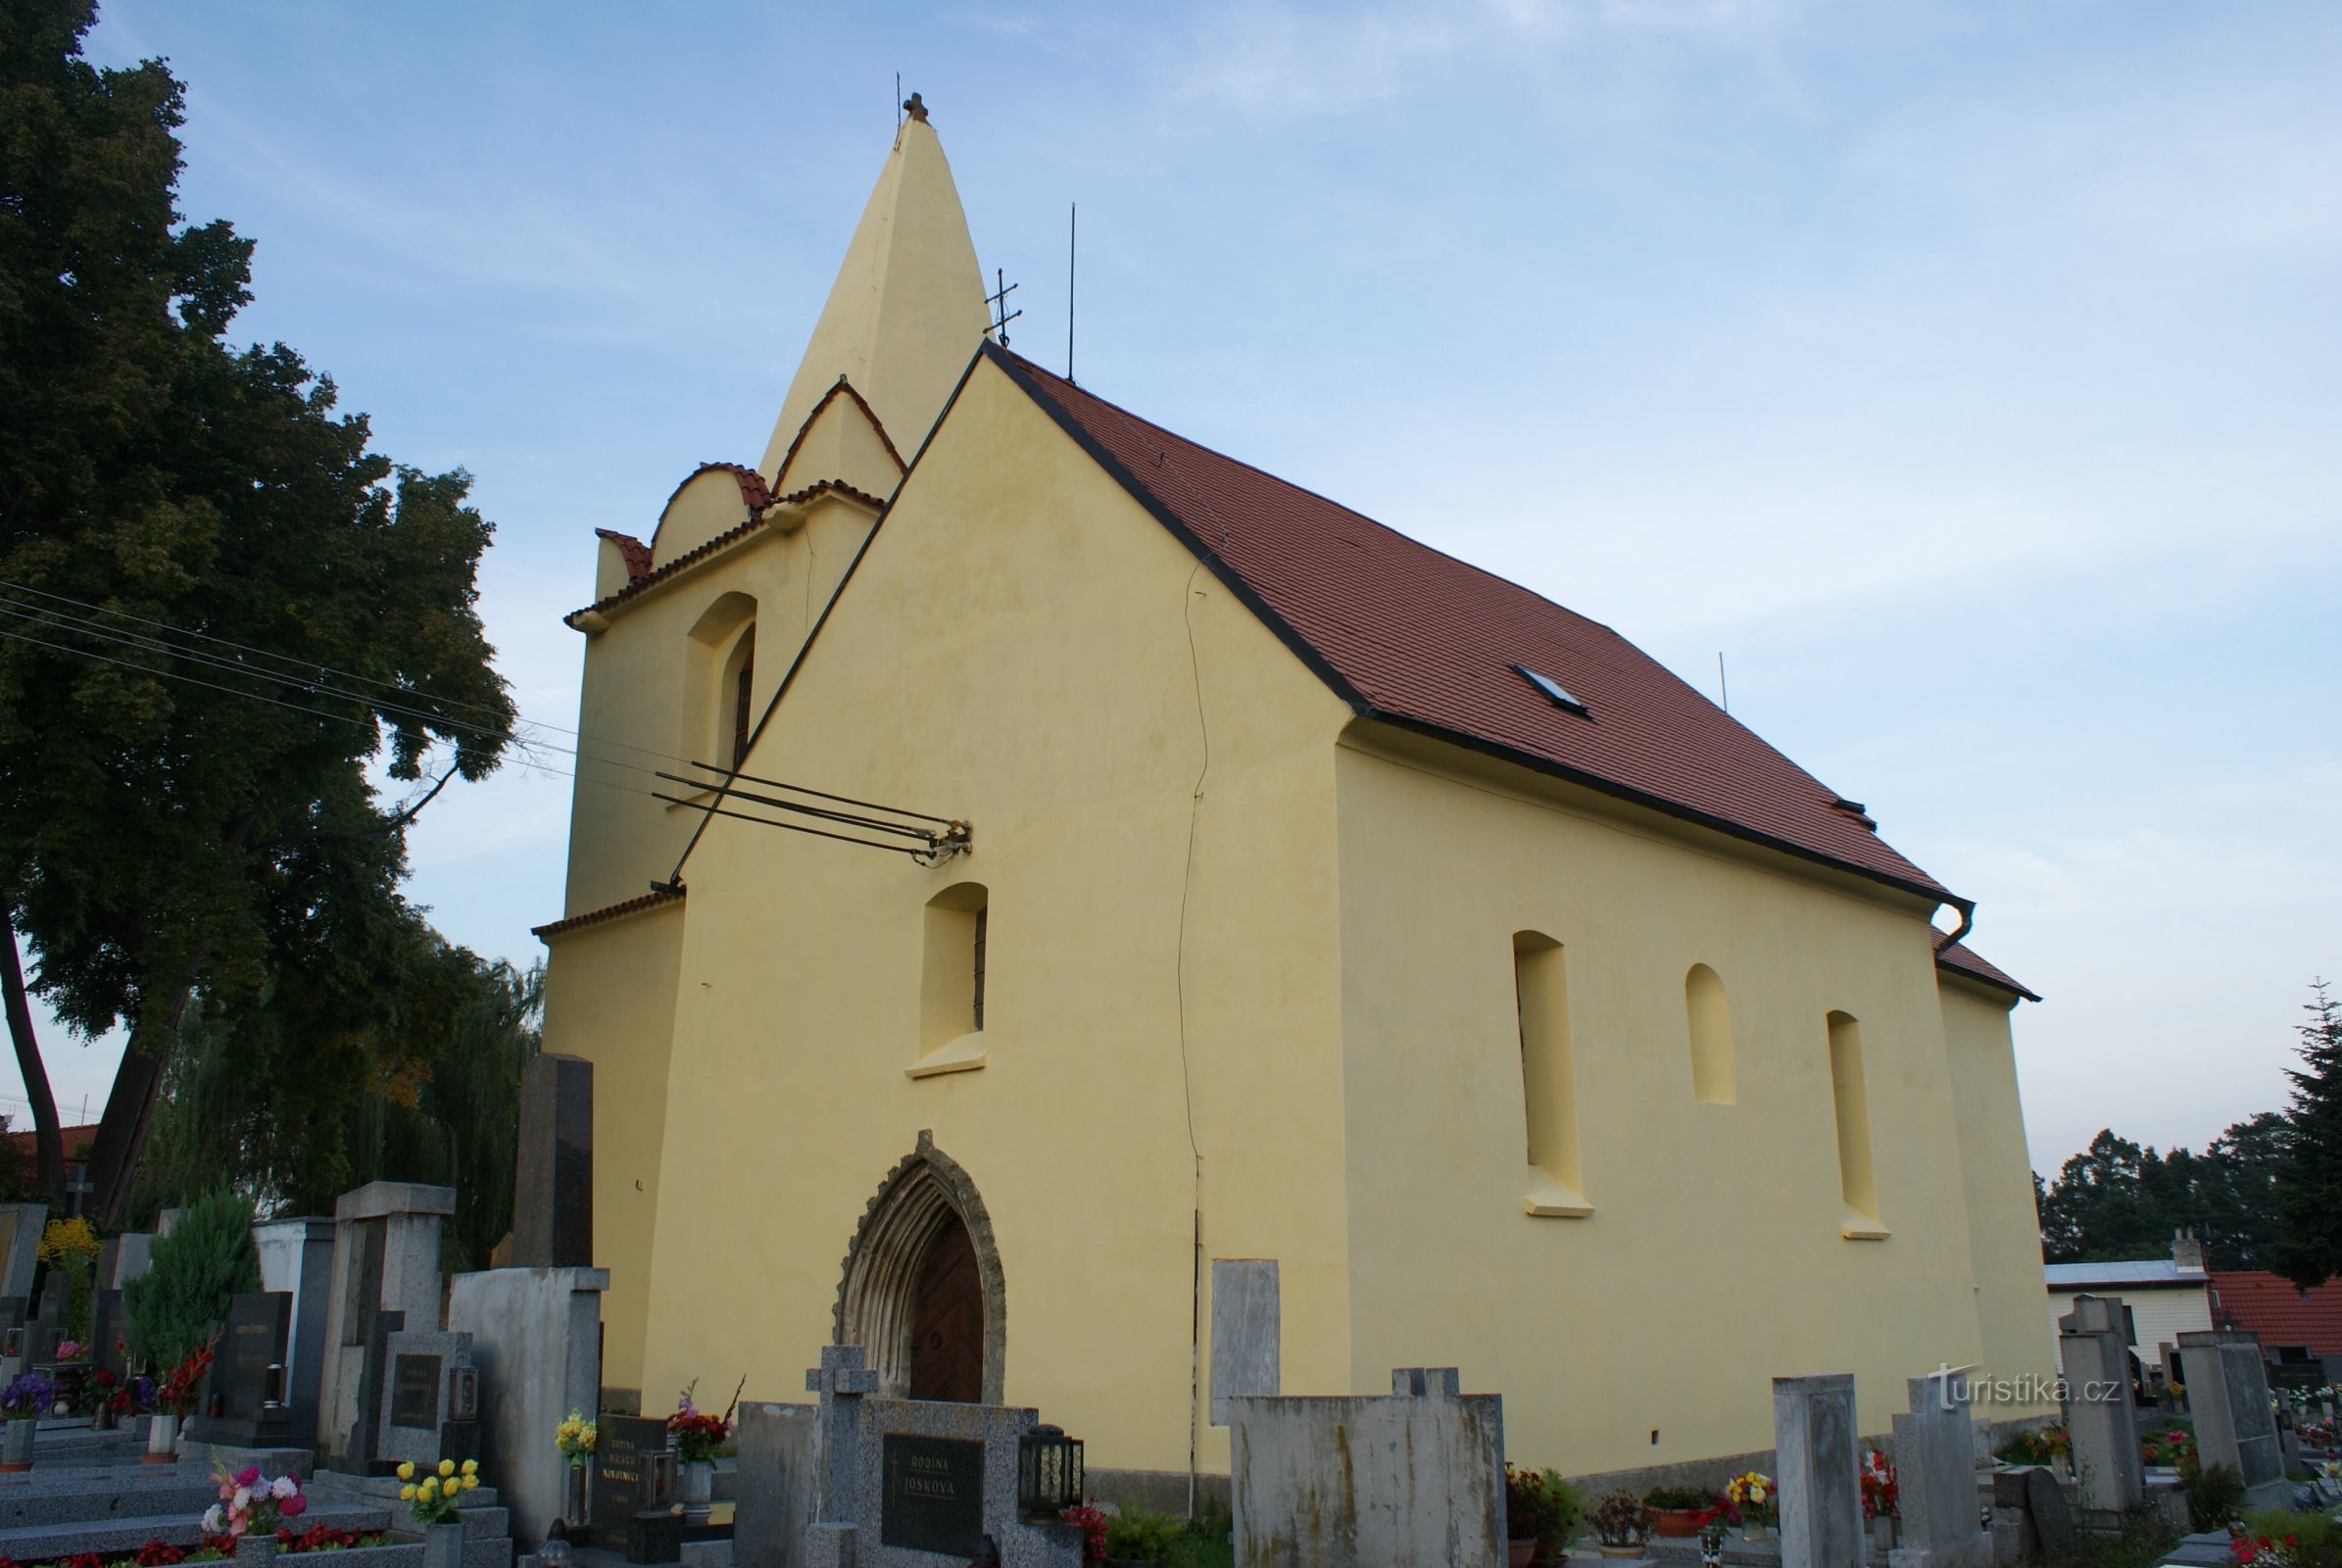 Okresaneč - kerk van St. Bartholomeus